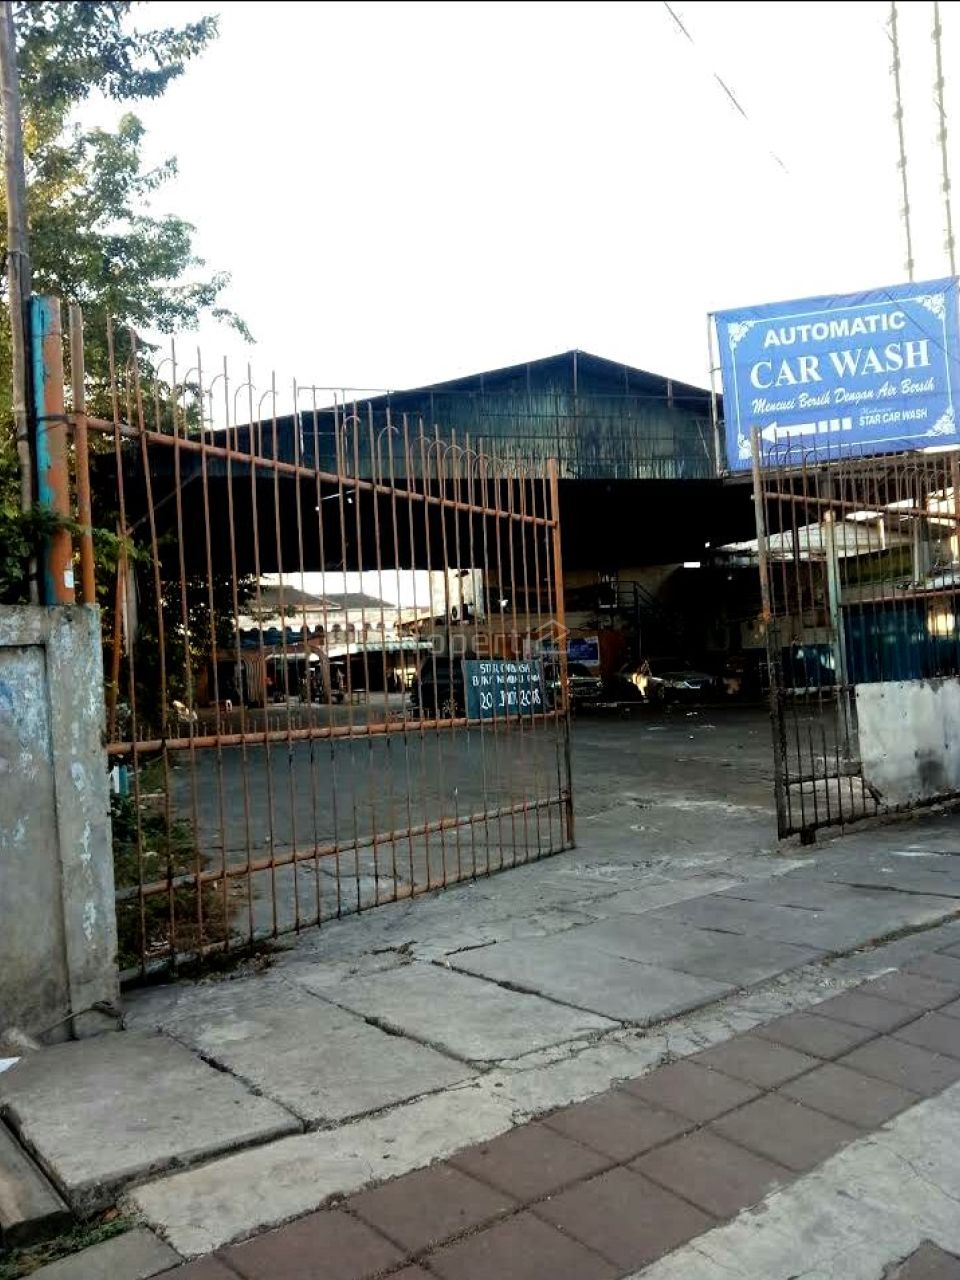 Commercial Land at Jalan Pramuka, Central Jakarta, DKI Jakarta